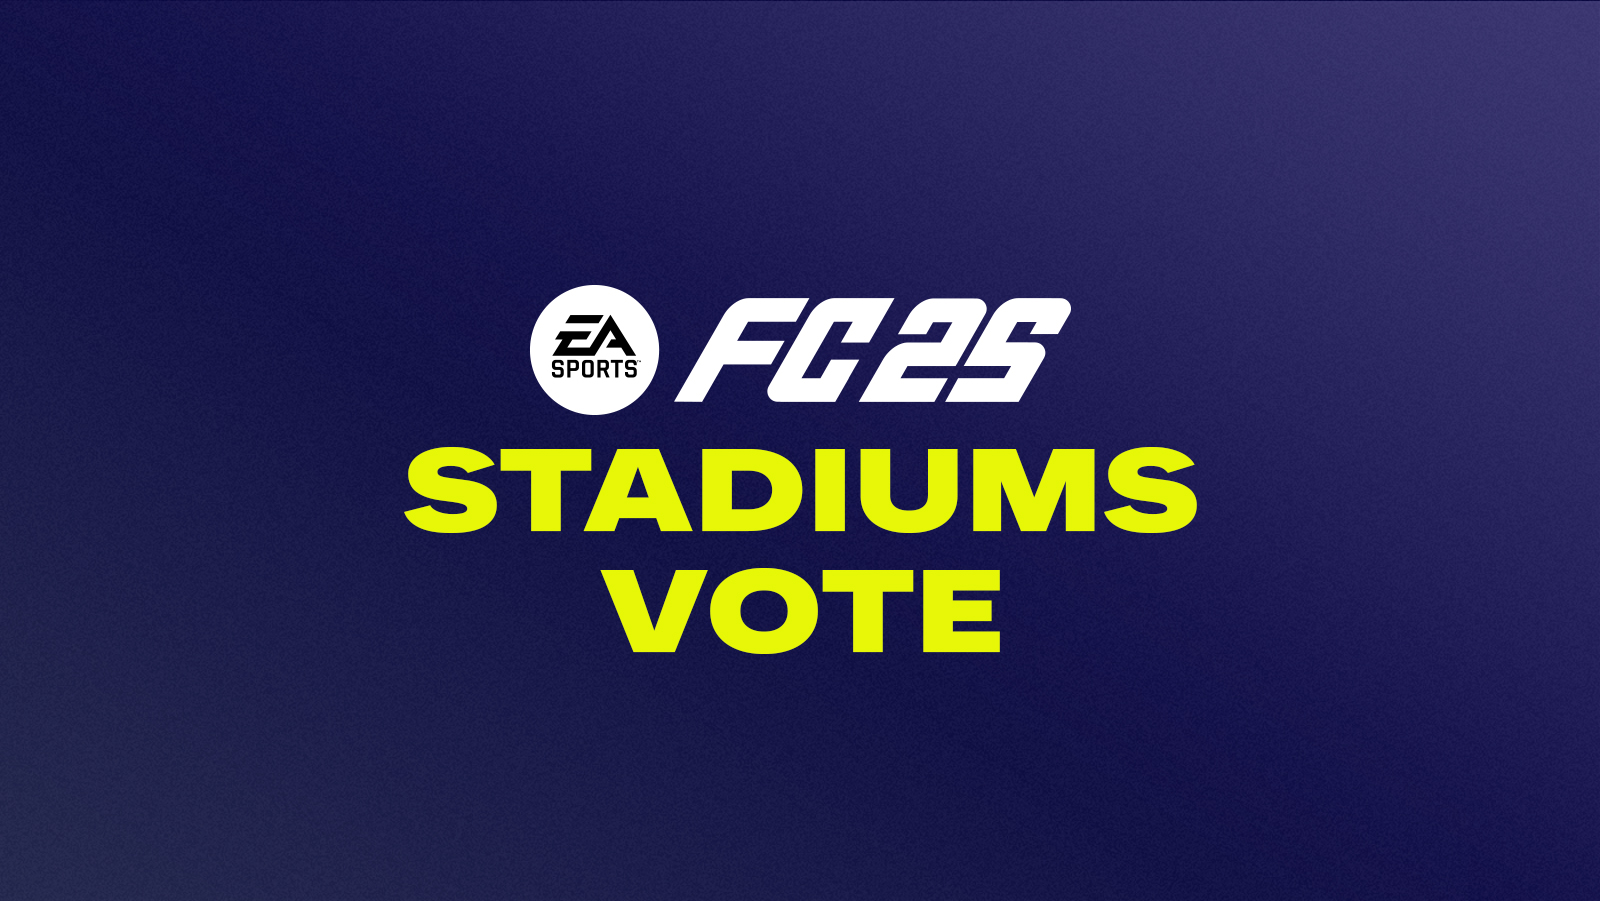 FC 25 New Stadiums Vote & Wishlist